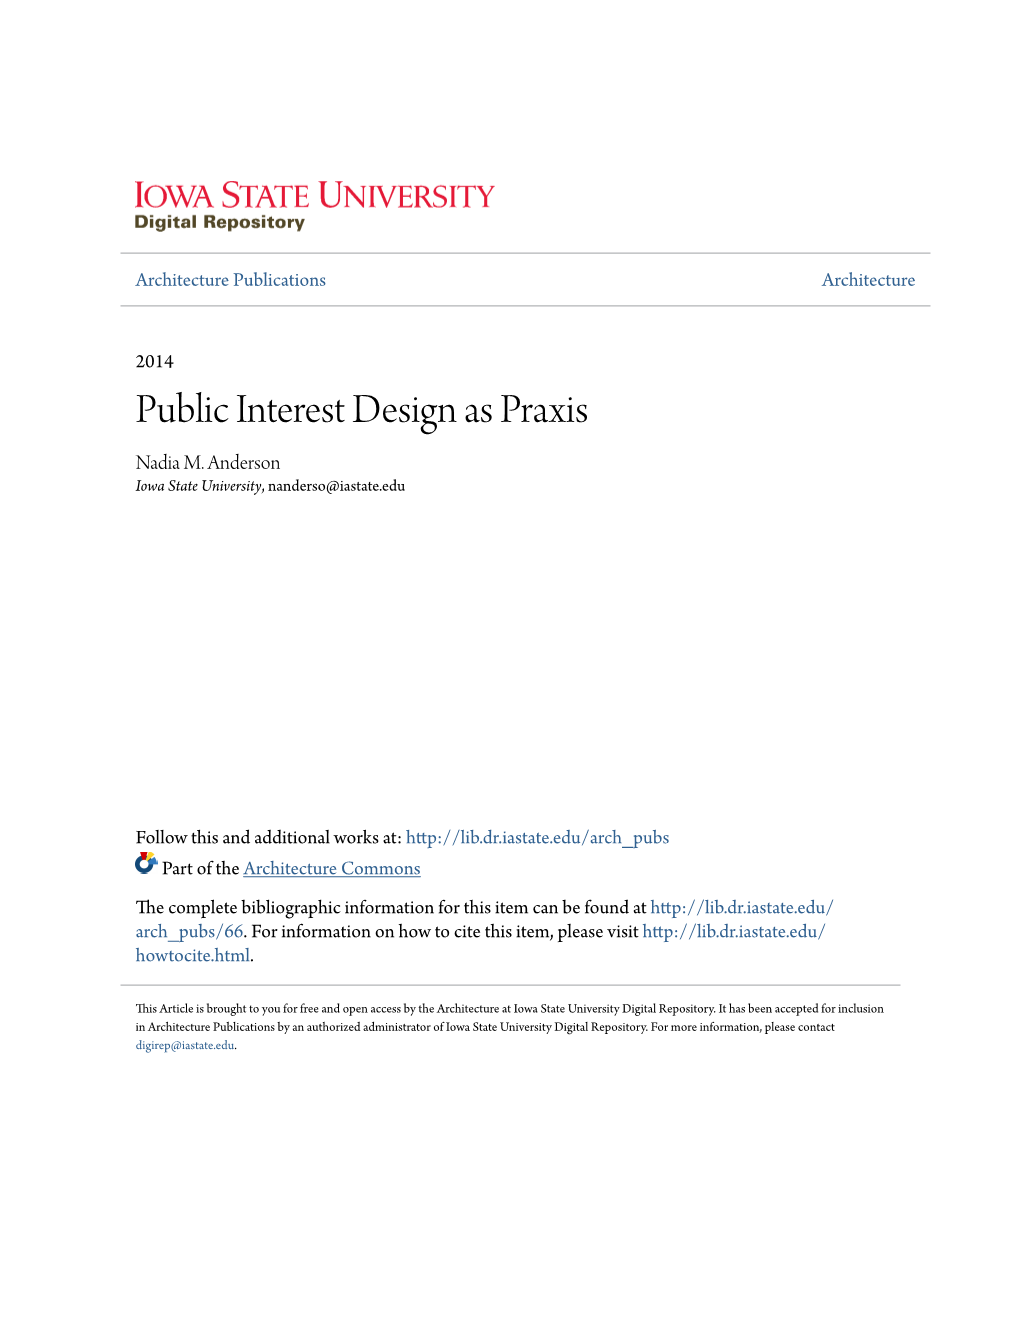 Public Interest Design As Praxis Nadia M